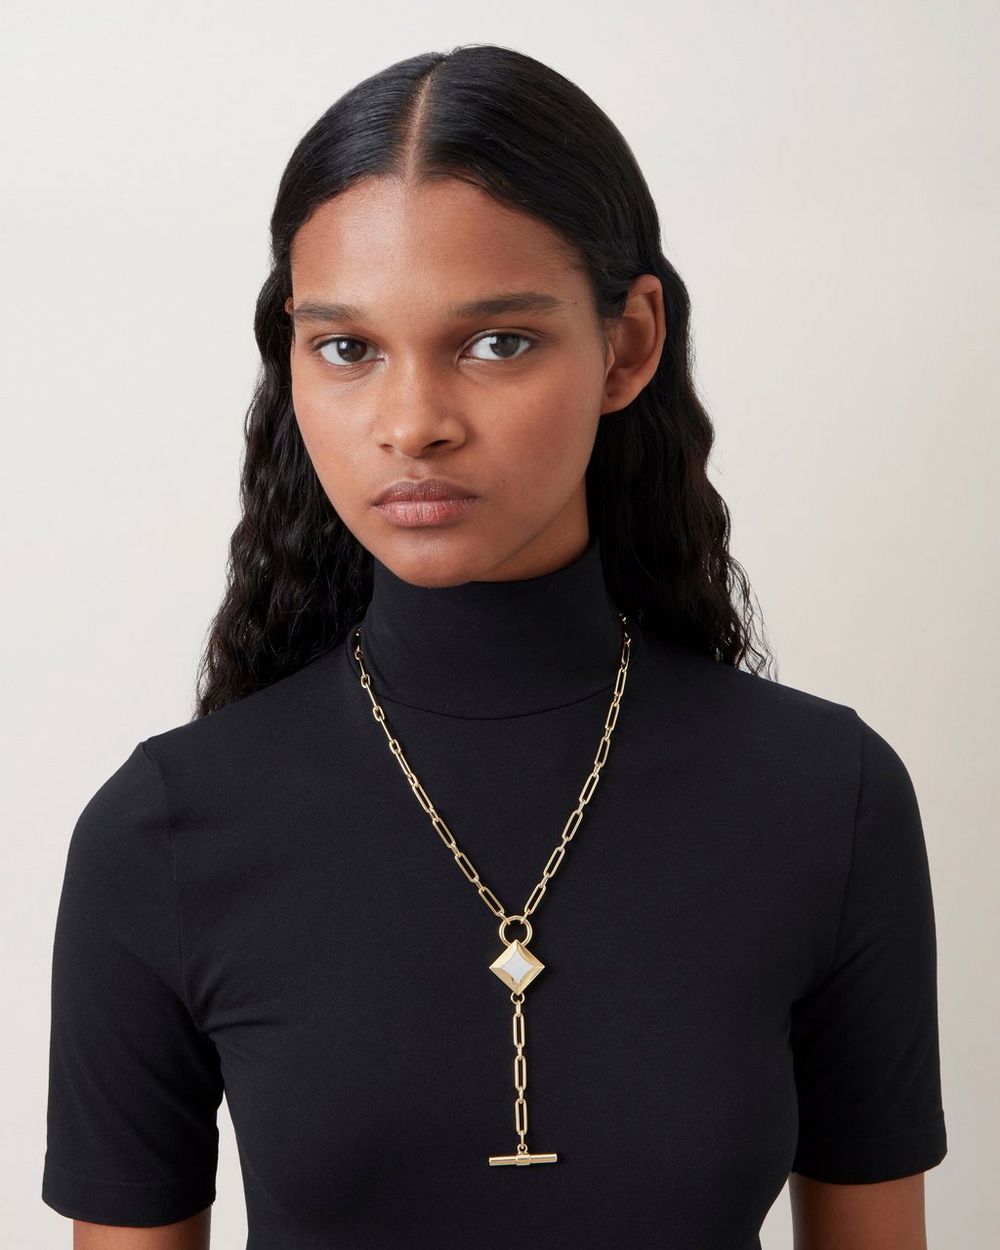 Louis Vuitton Monogram Street Style Chain Plain Logo Necklaces